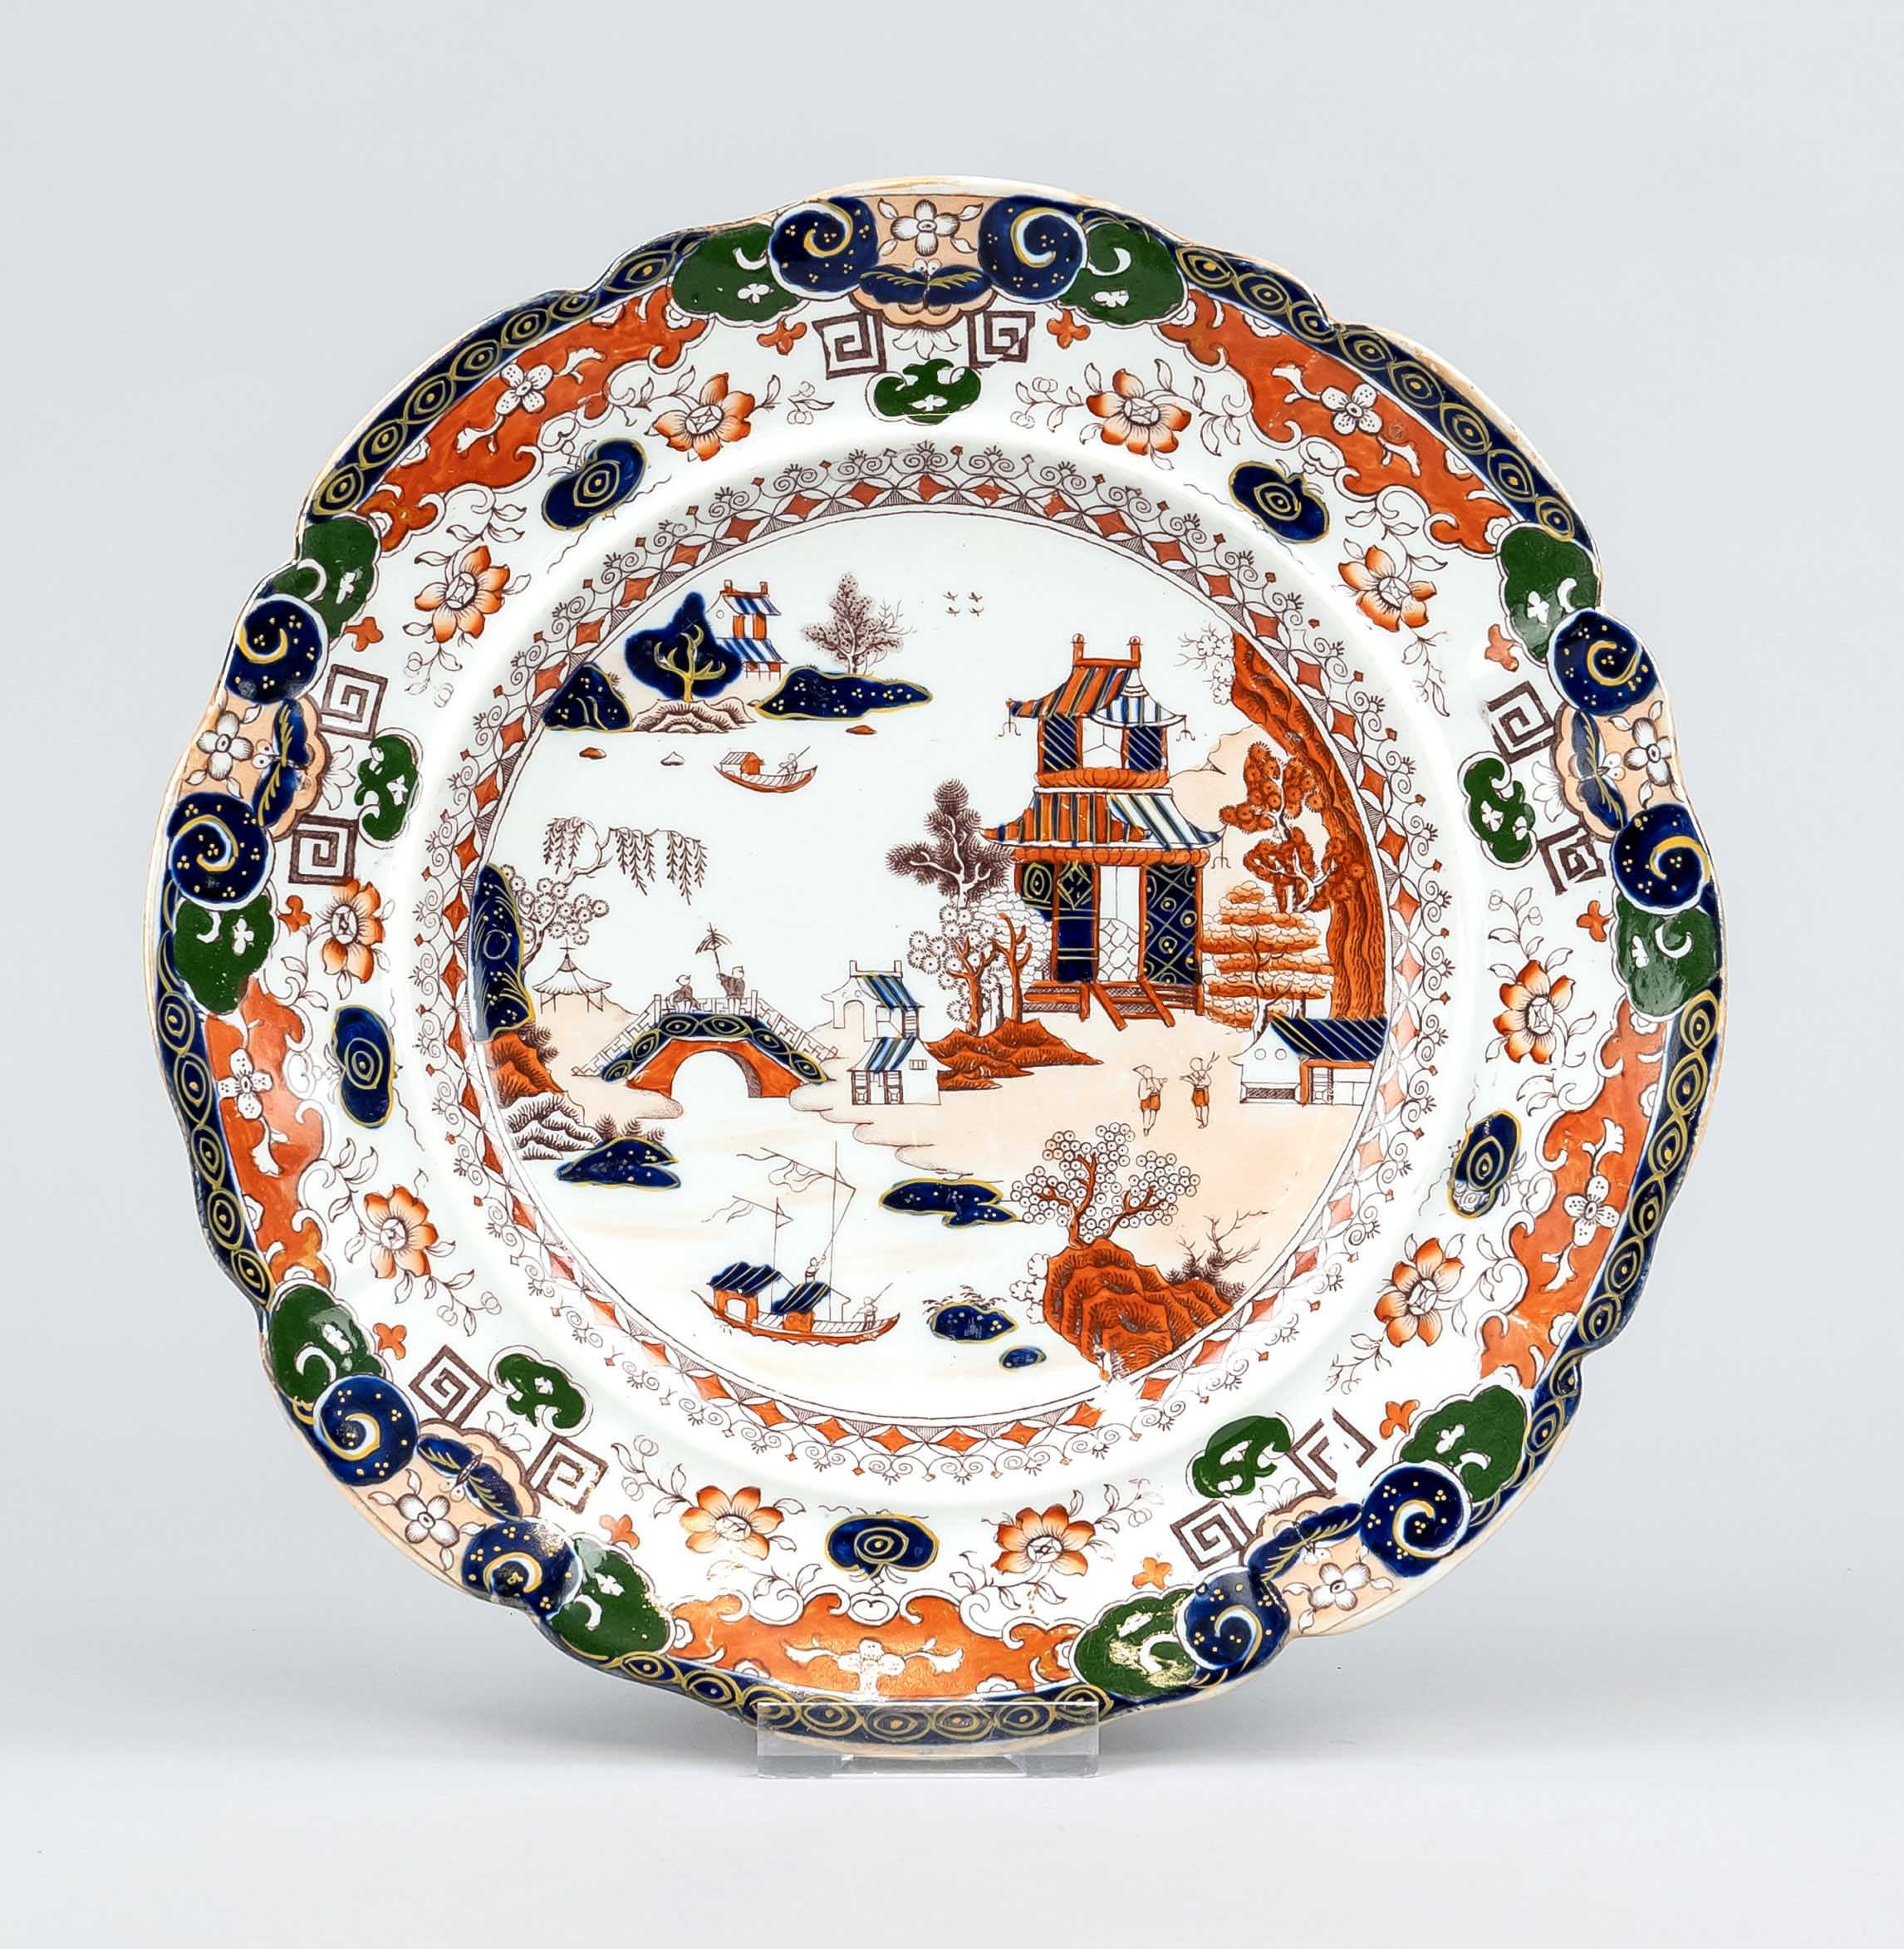 English China plate, UK, 19th/20th century, porcelain with polychrome glaze design of idealized